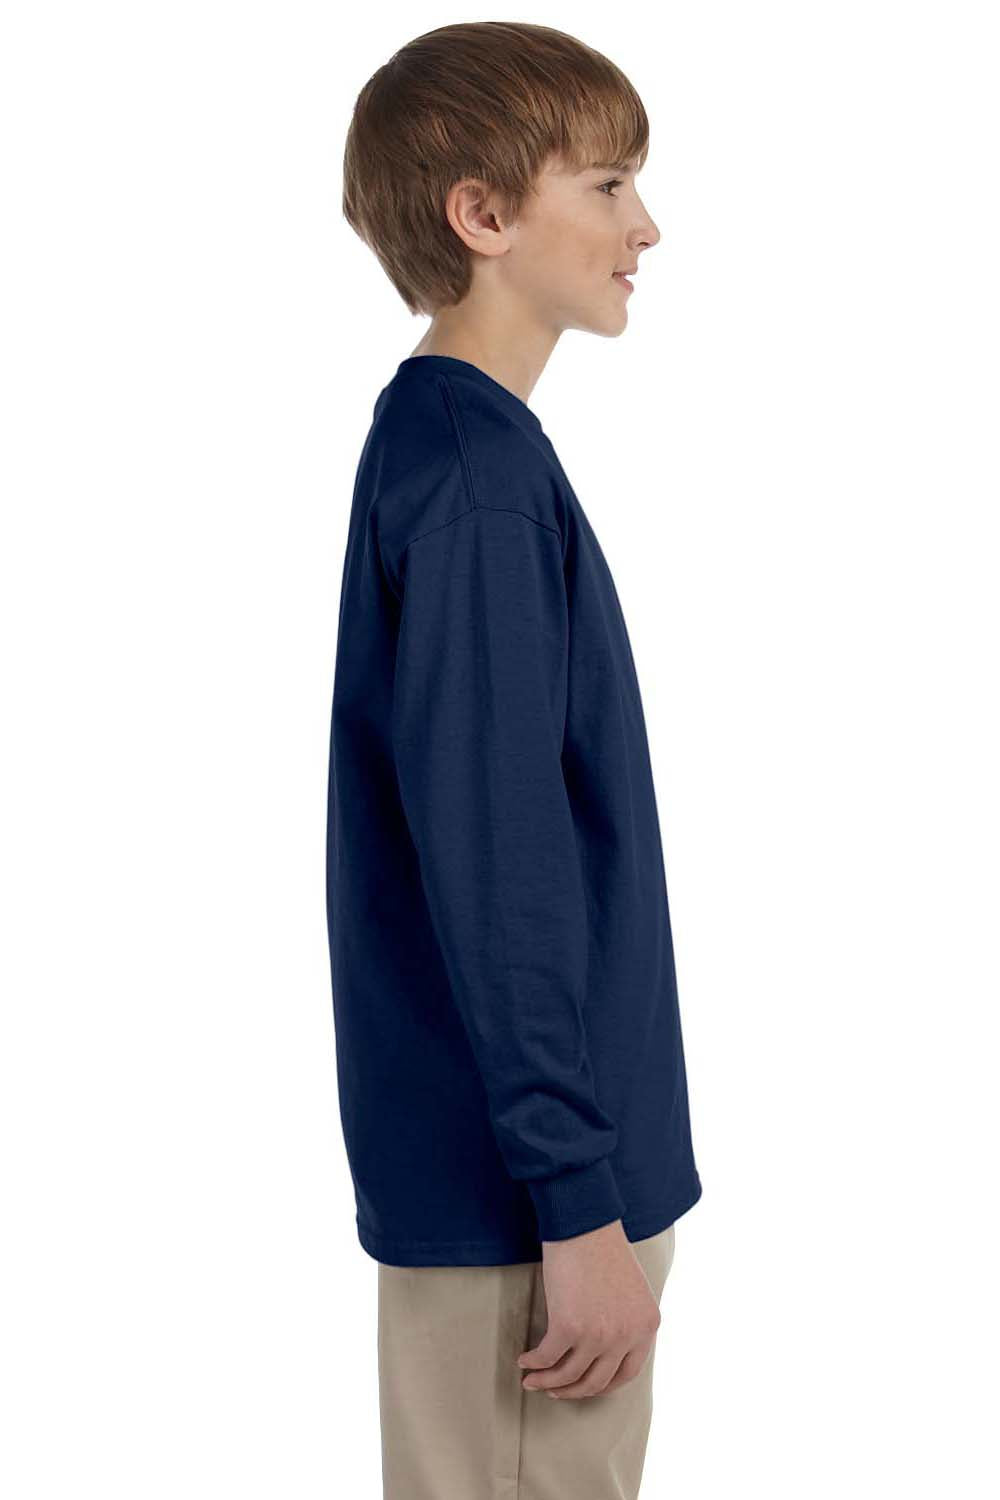 Jerzees 29BL Youth Dri-Power Moisture Wicking Long Sleeve Crewneck T-Shirt Navy Blue Side